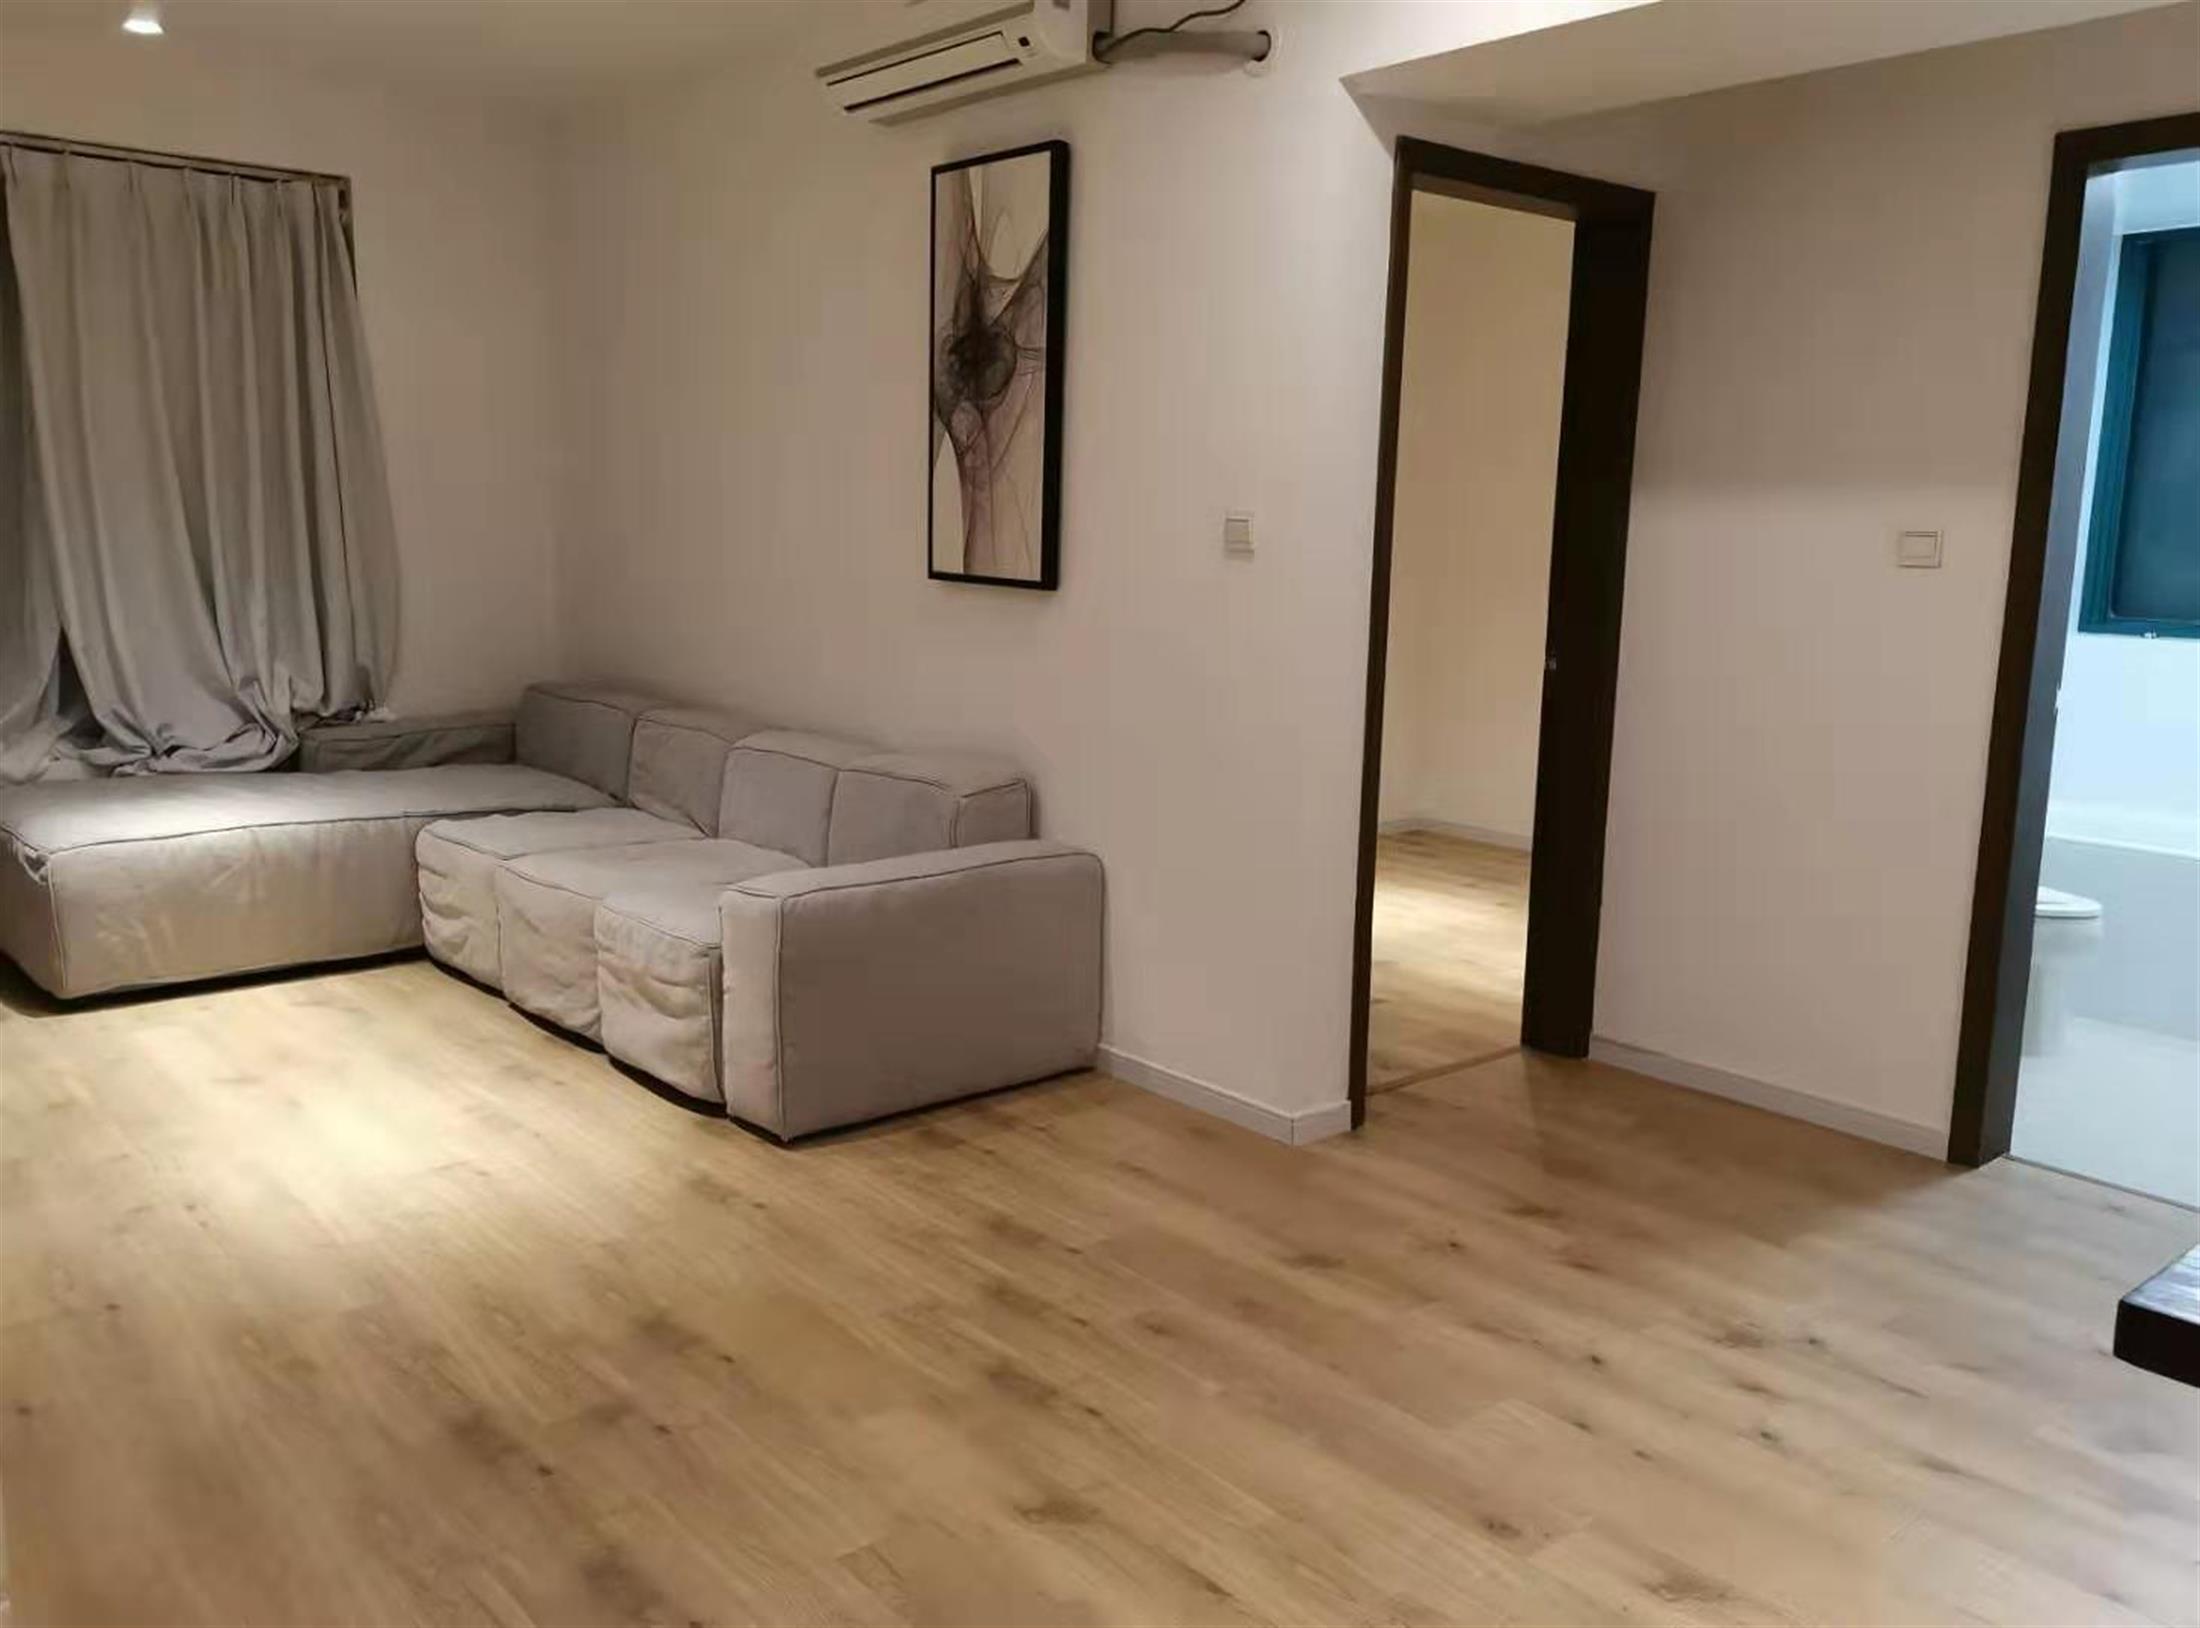 Beautiful Floors Low Priced Oriental Manhattan Apartment for Rent in Shanghai